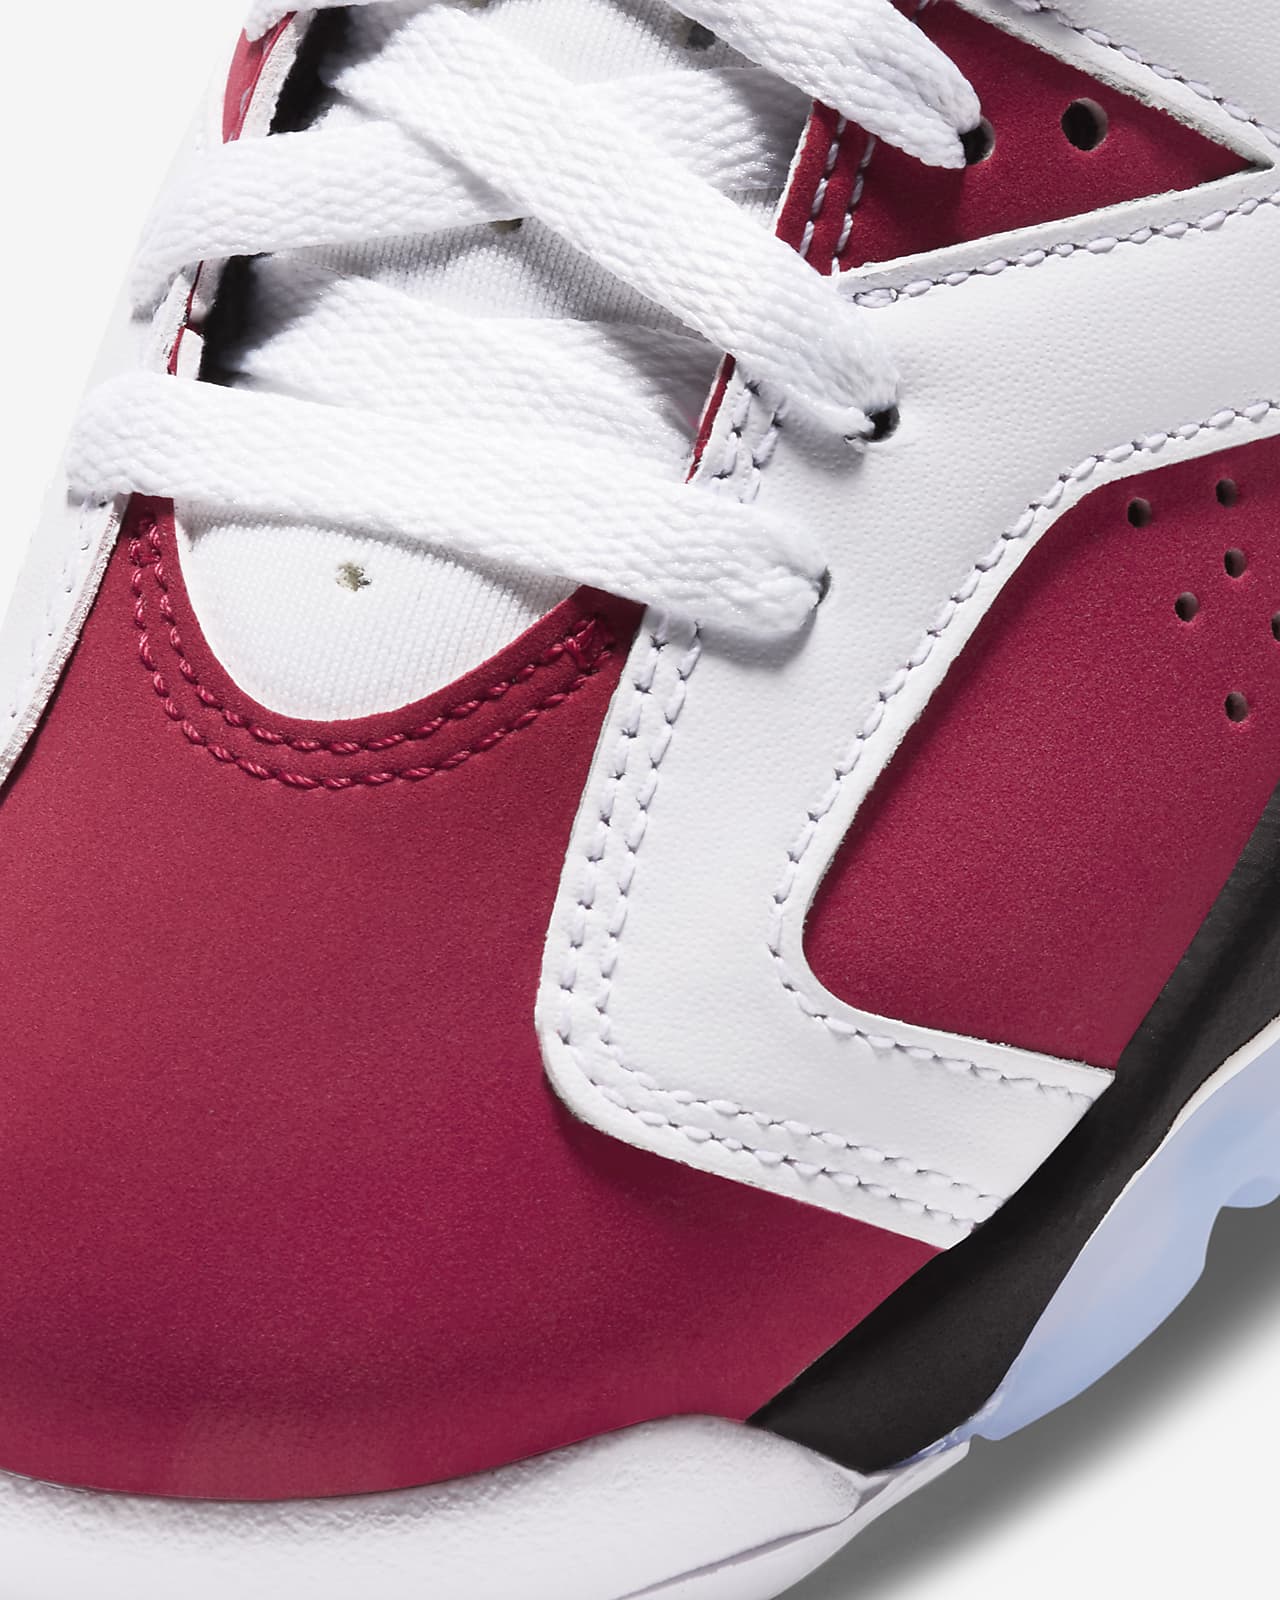 Air Jordan 6 Retro Schuh Fur Altere Kinder Nike De